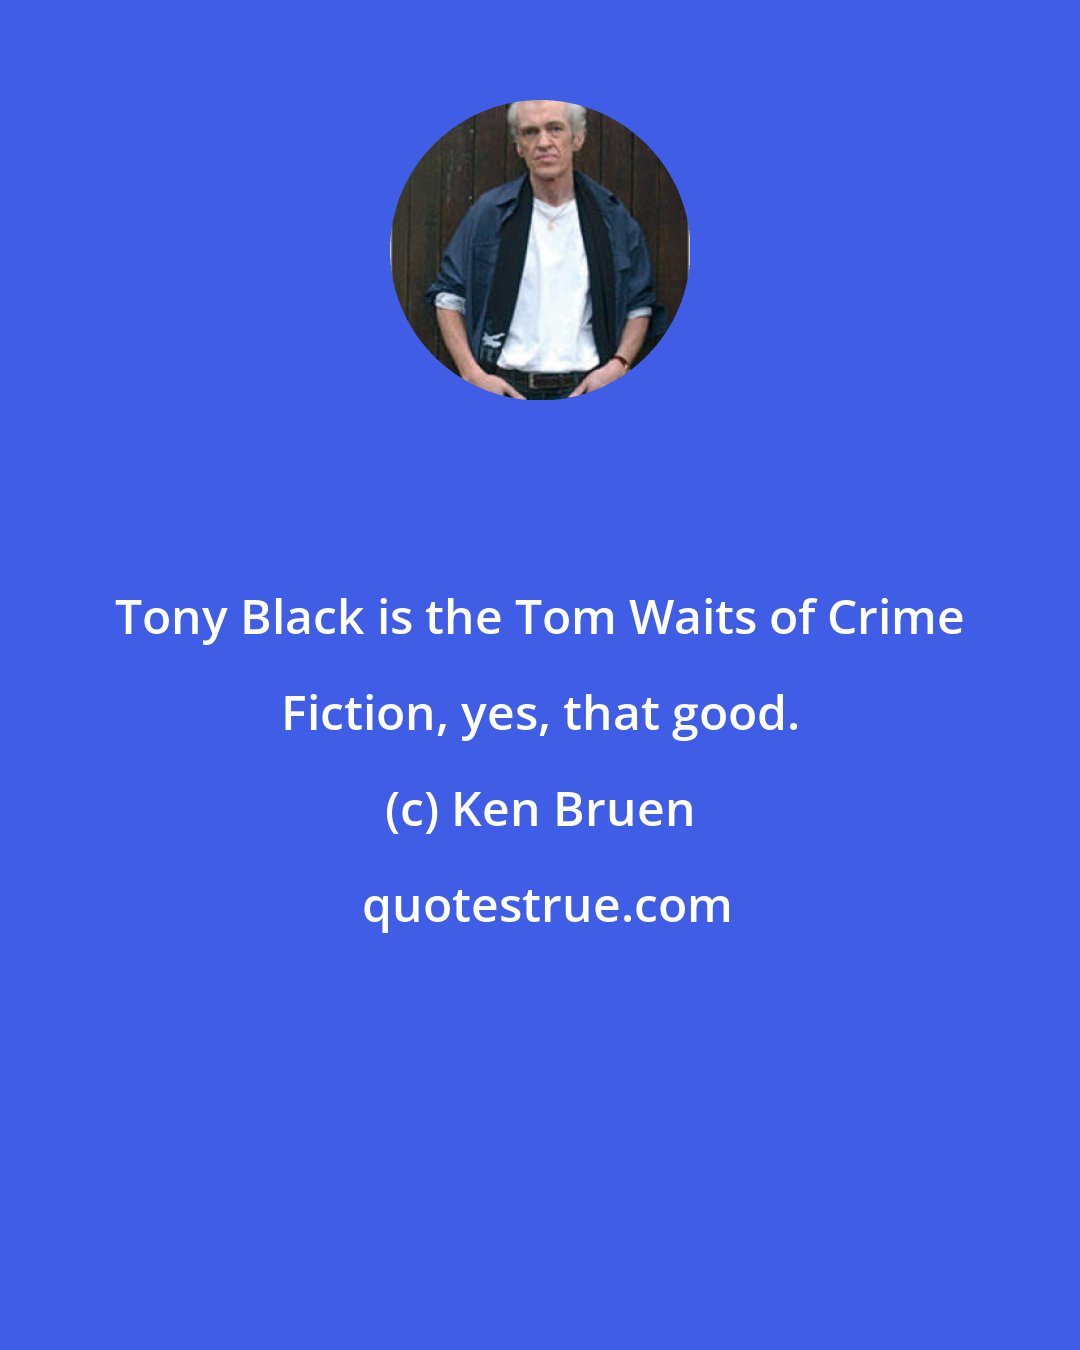 Ken Bruen: Tony Black is the Tom Waits of Crime Fiction, yes, that good.